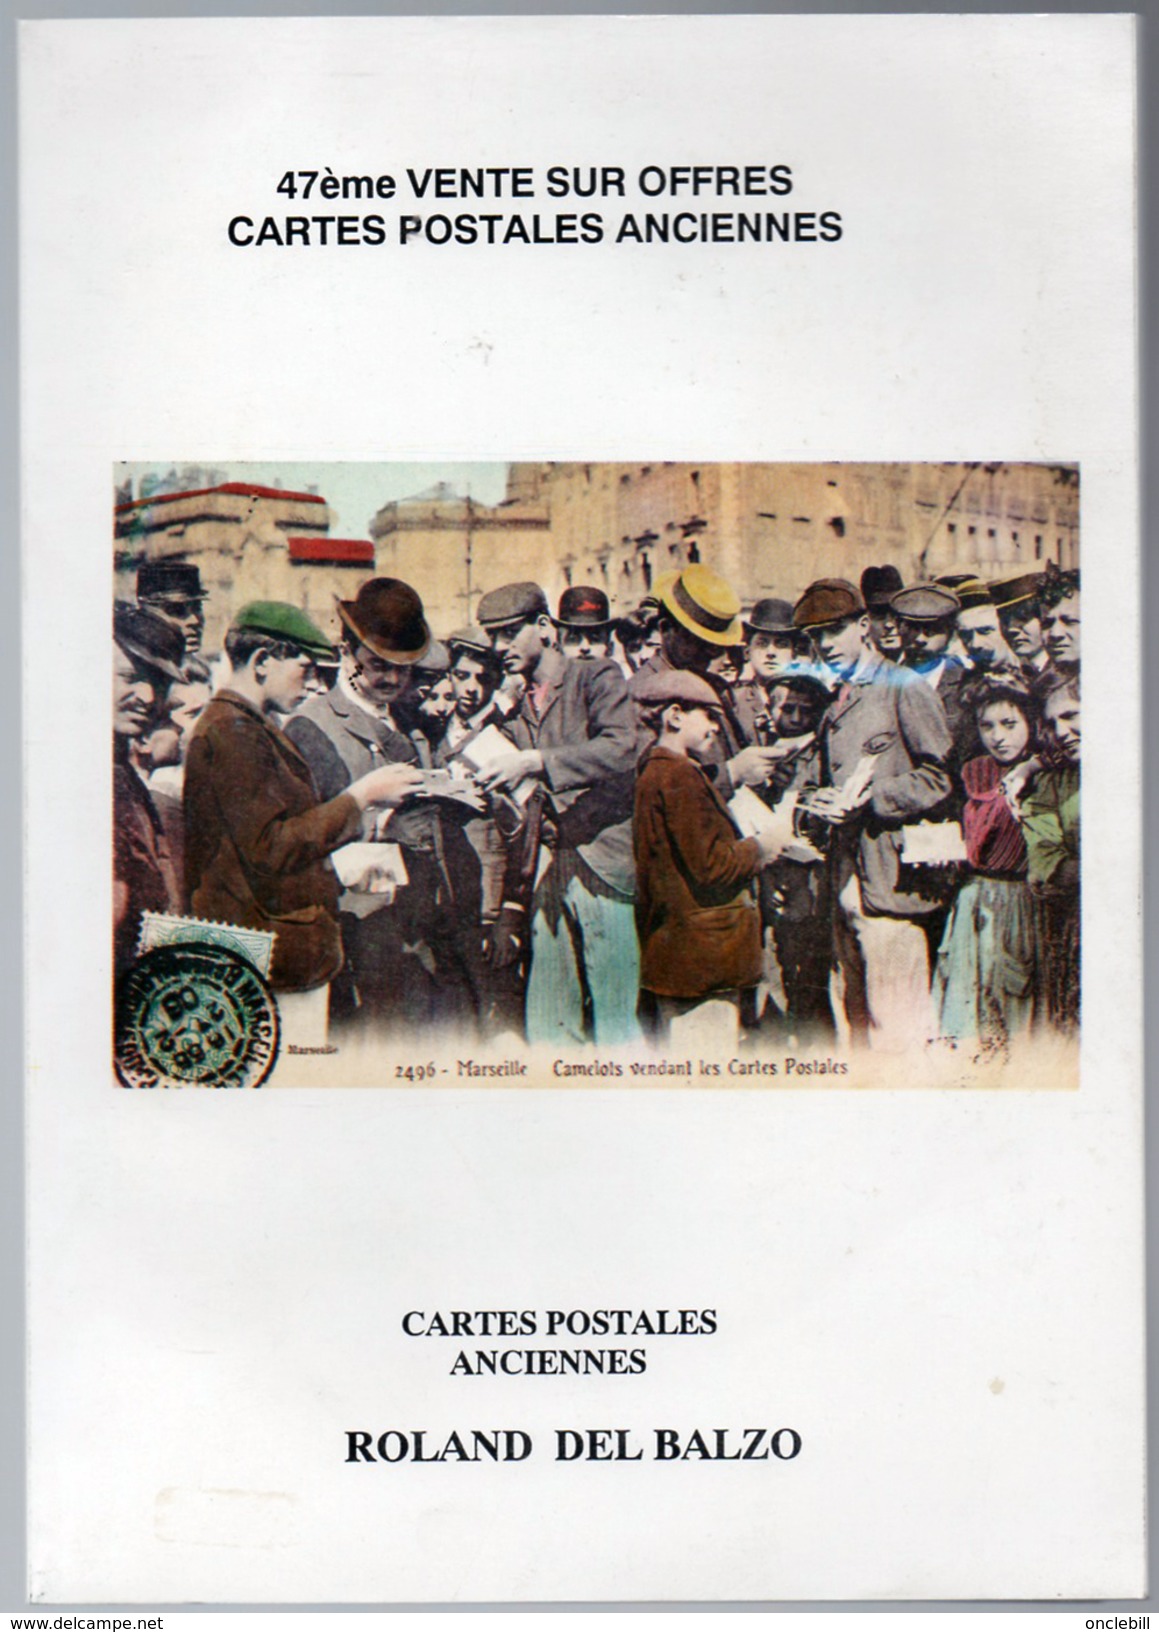 Catalogue Cartes Postales Vente Sur Offres Del Balzo N° 47 1993 état Superbe - Livres & Catalogues